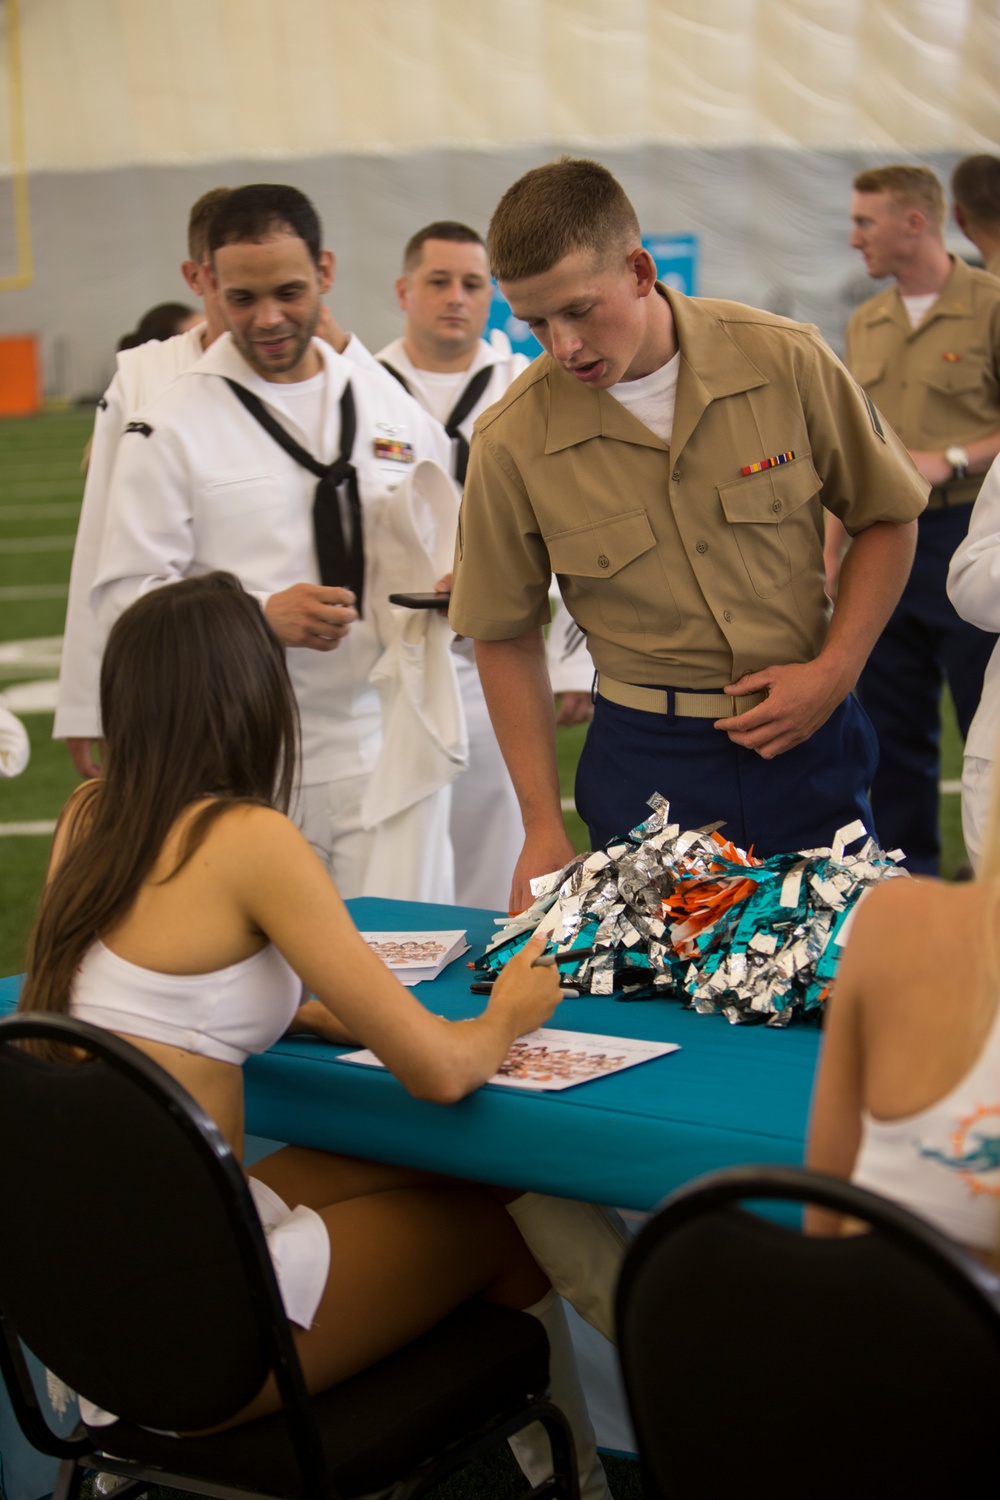 Fleet Week Marines and Sailors tour Miami Dolphins training facility